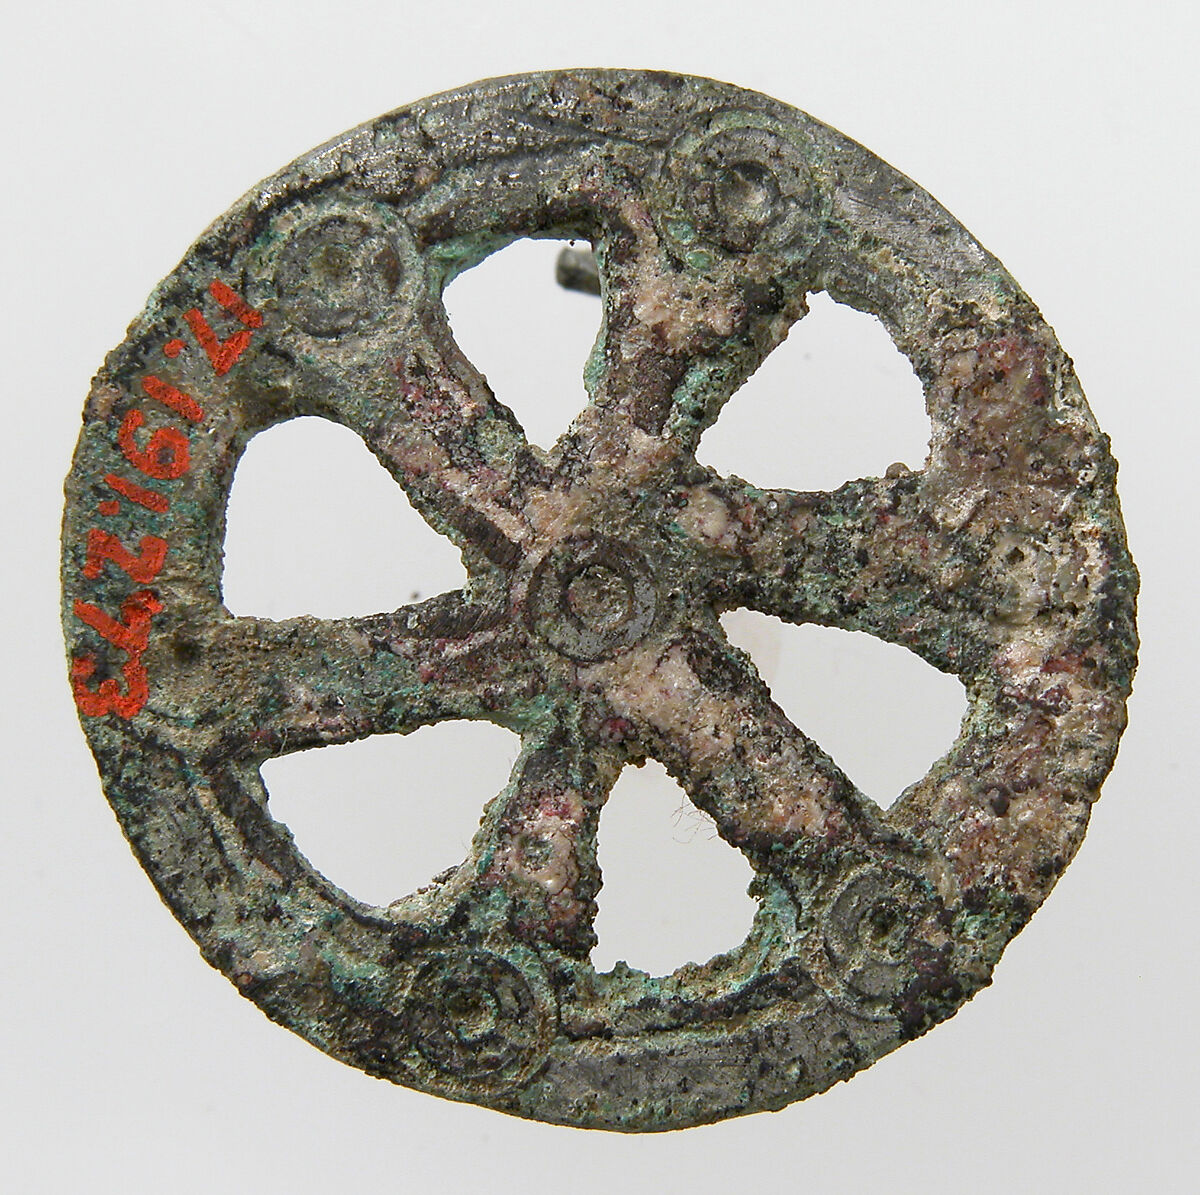 Flat Circular Openwork Ornament from a Belt, Silvered Copper alloy, Roman 